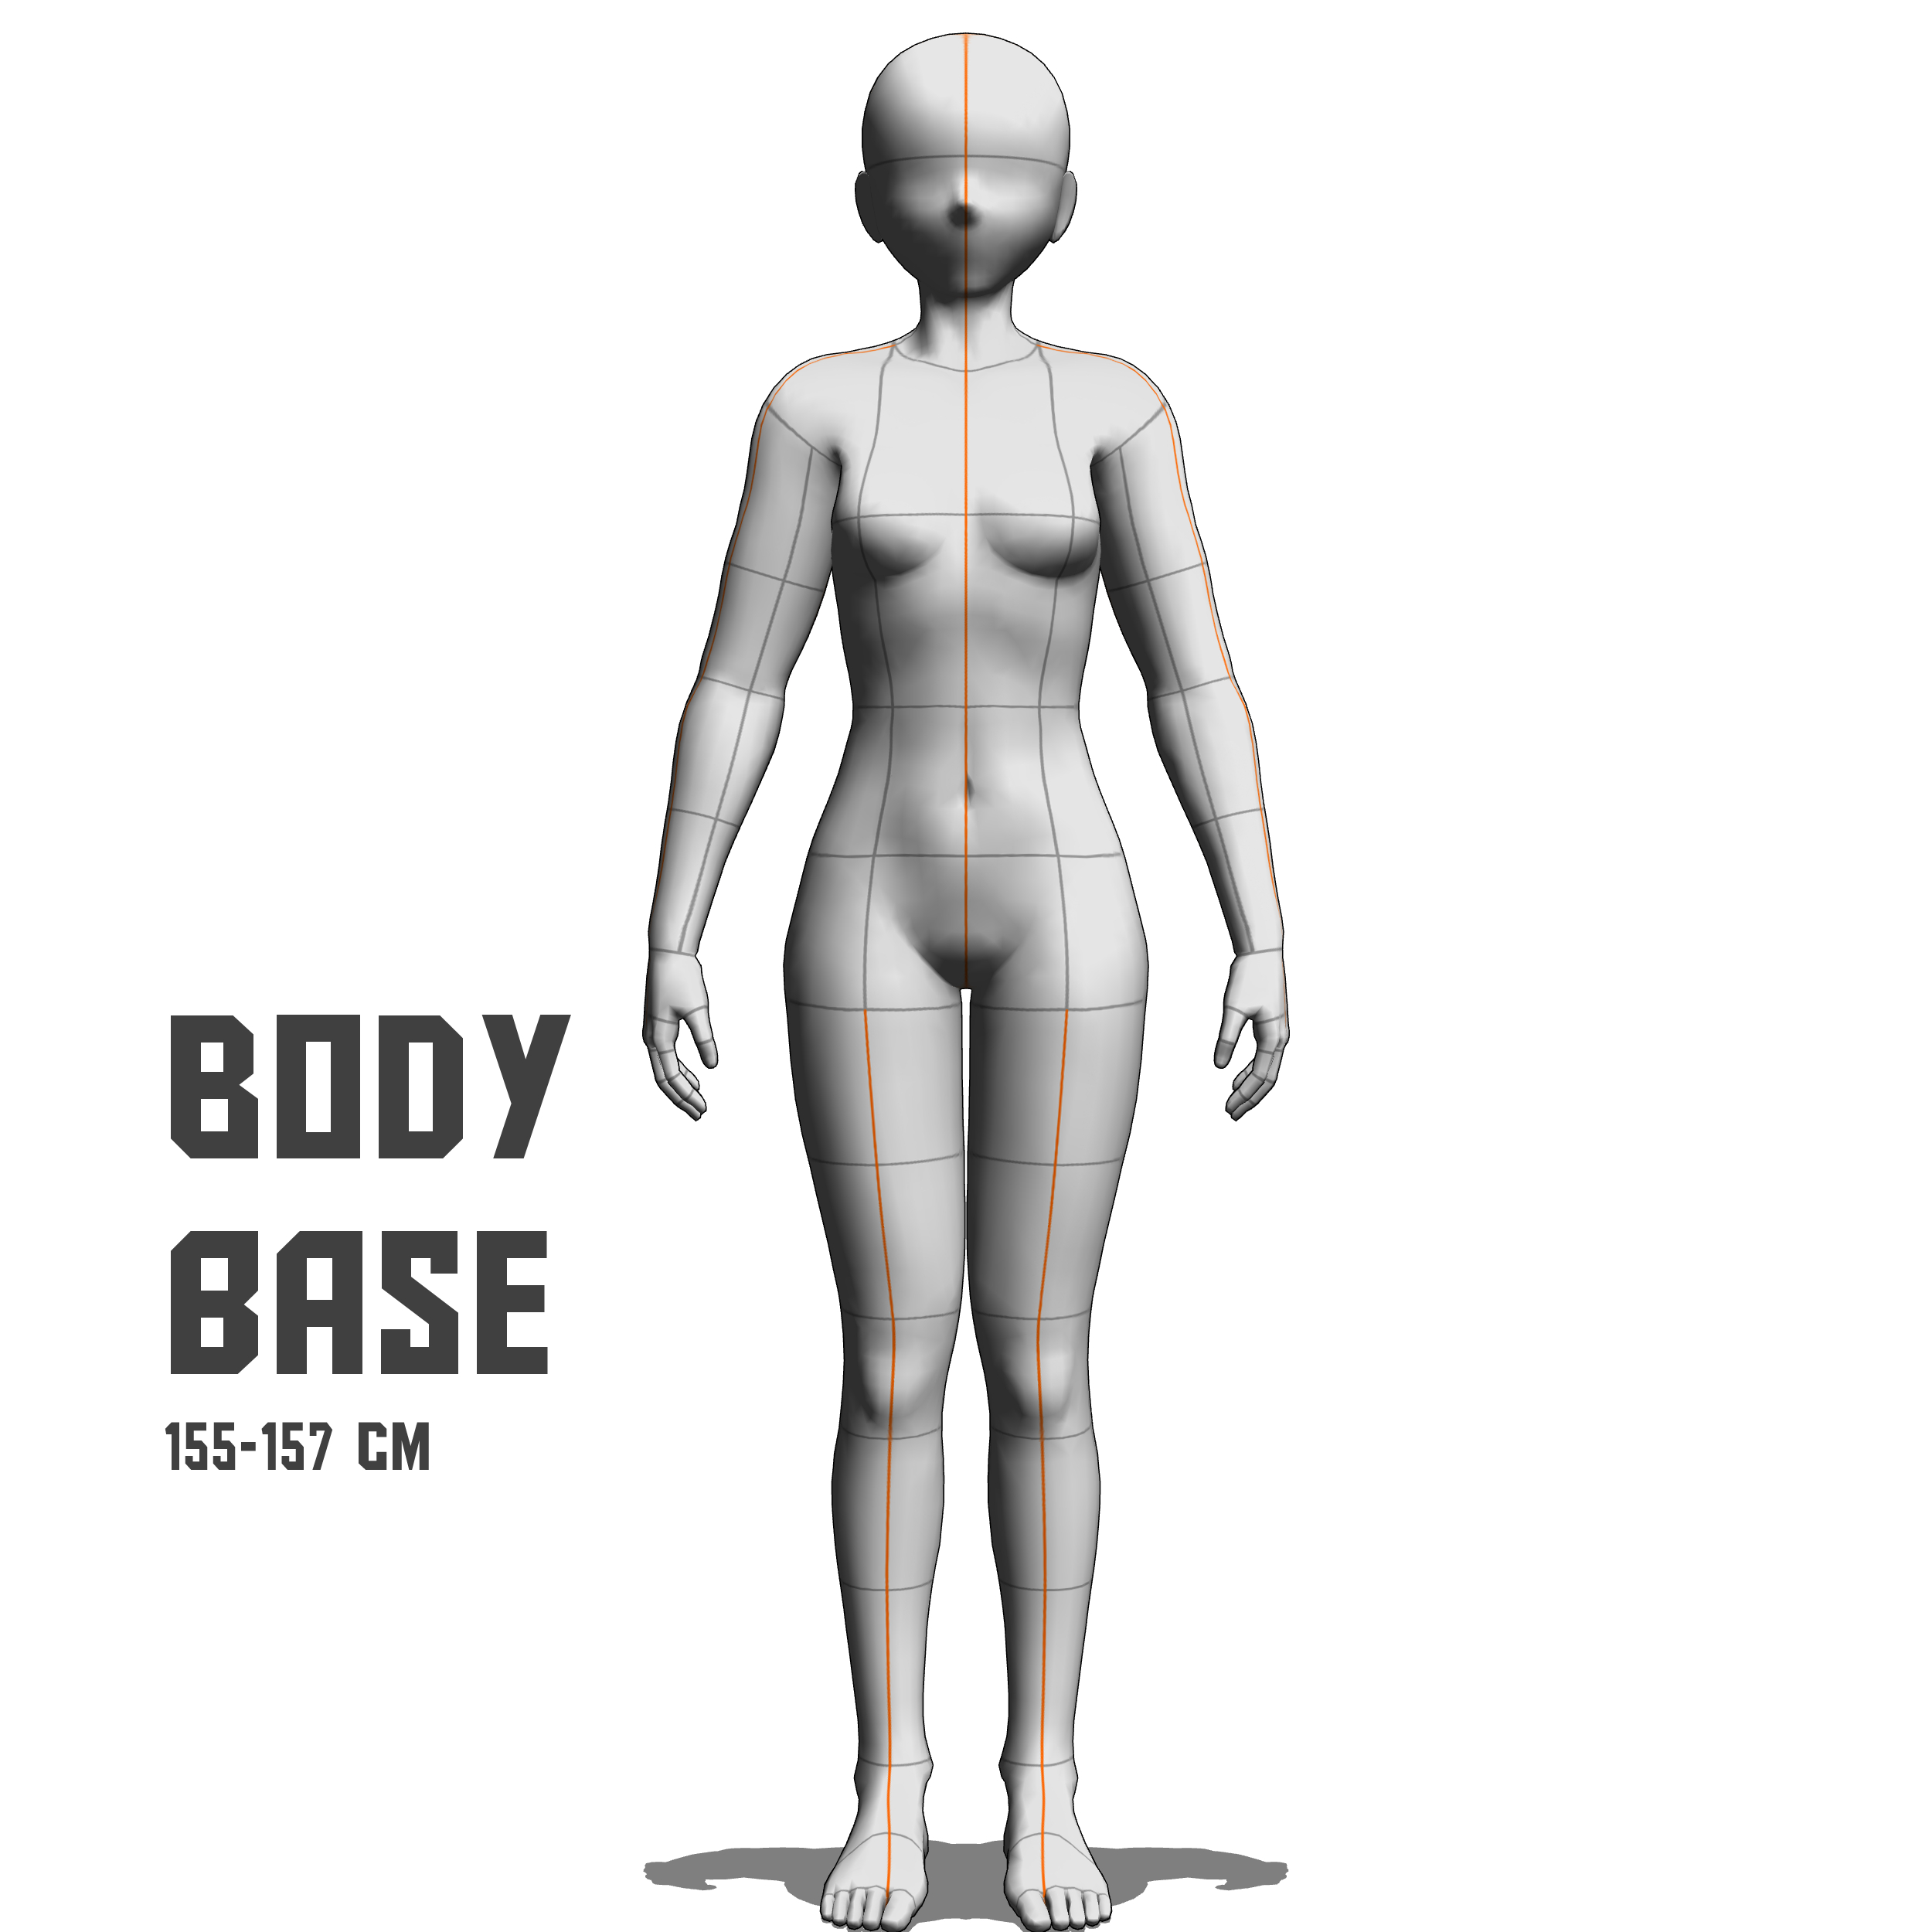 the body base